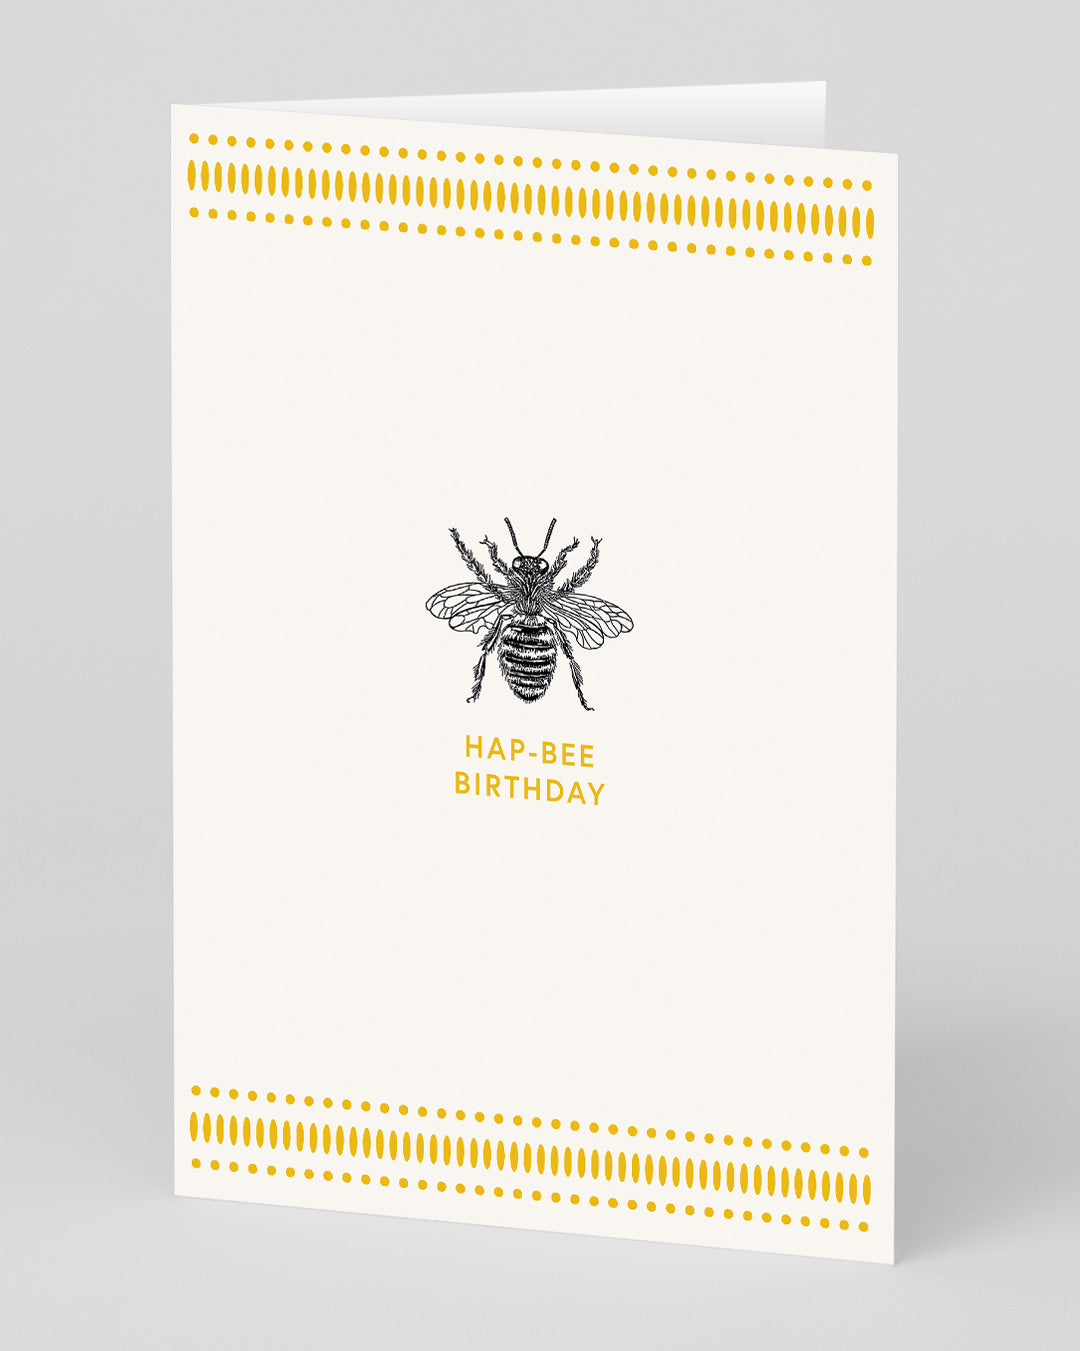 Birthday Card Hap-Bee Birthday Greeting Card